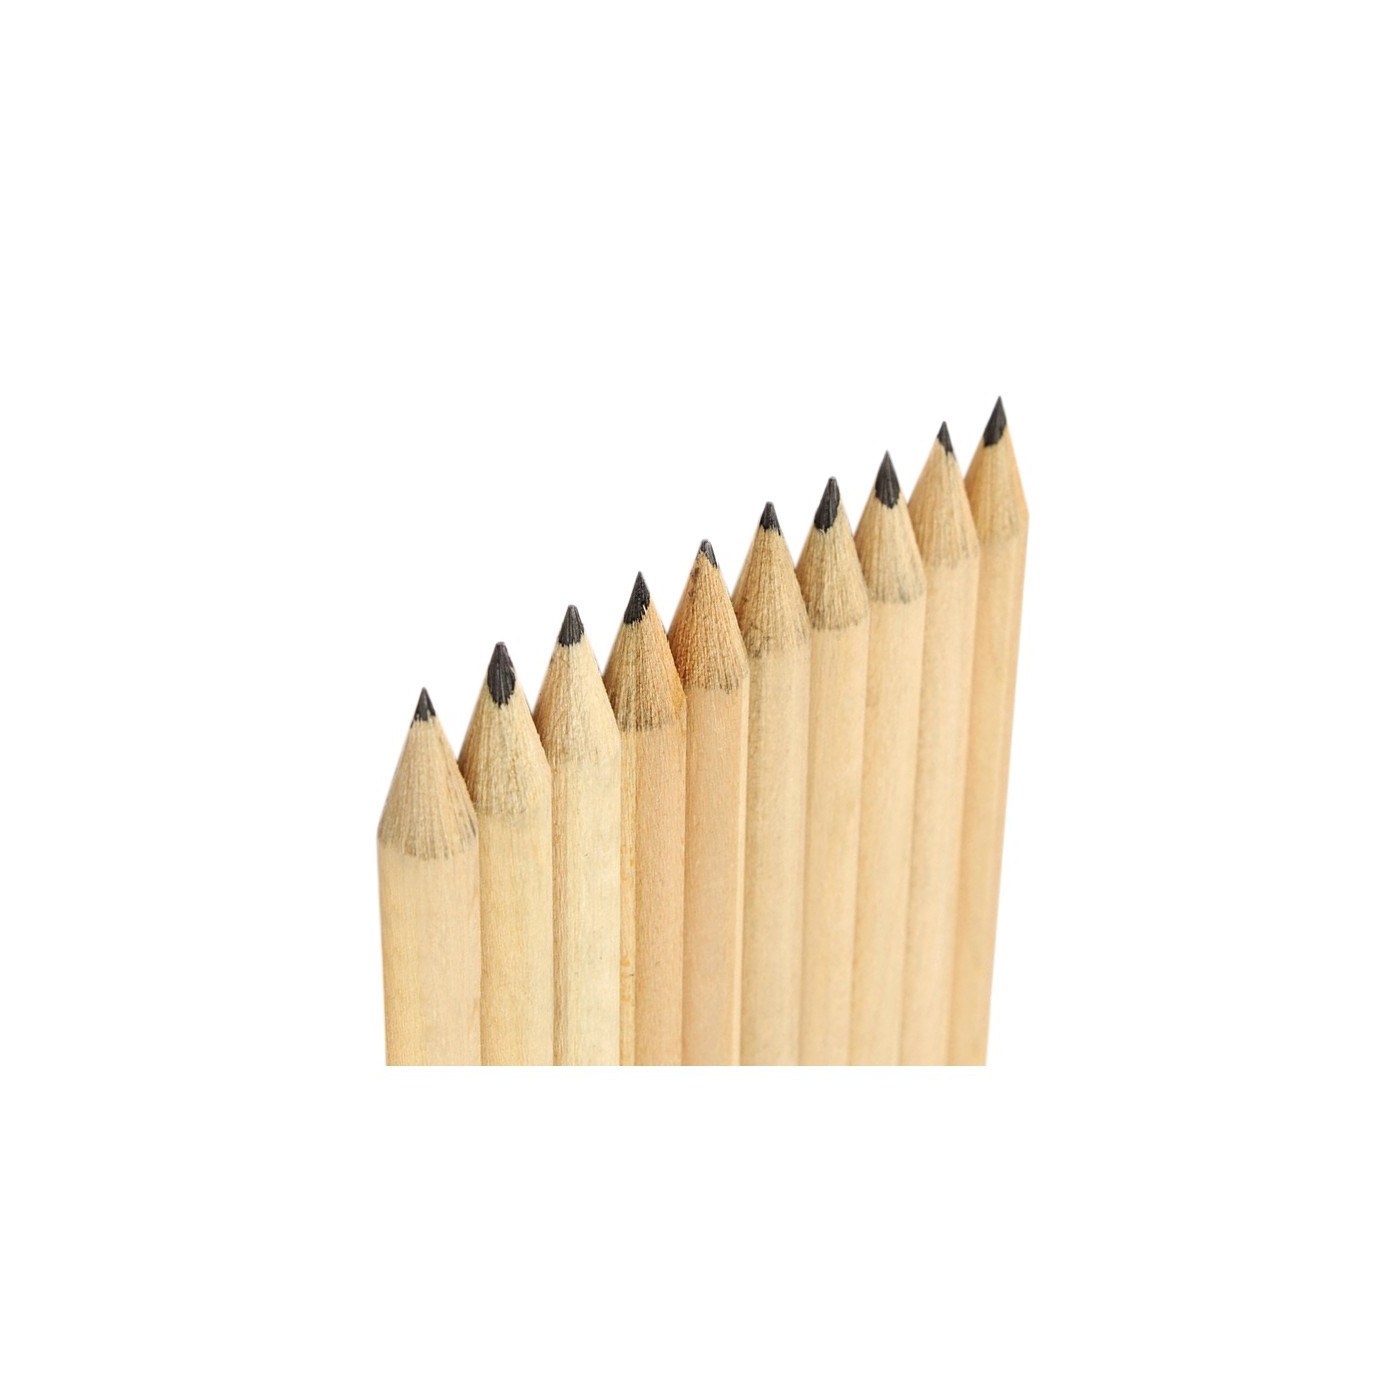 Set of 50 pencils (19 cm length, type 4, with eraser)